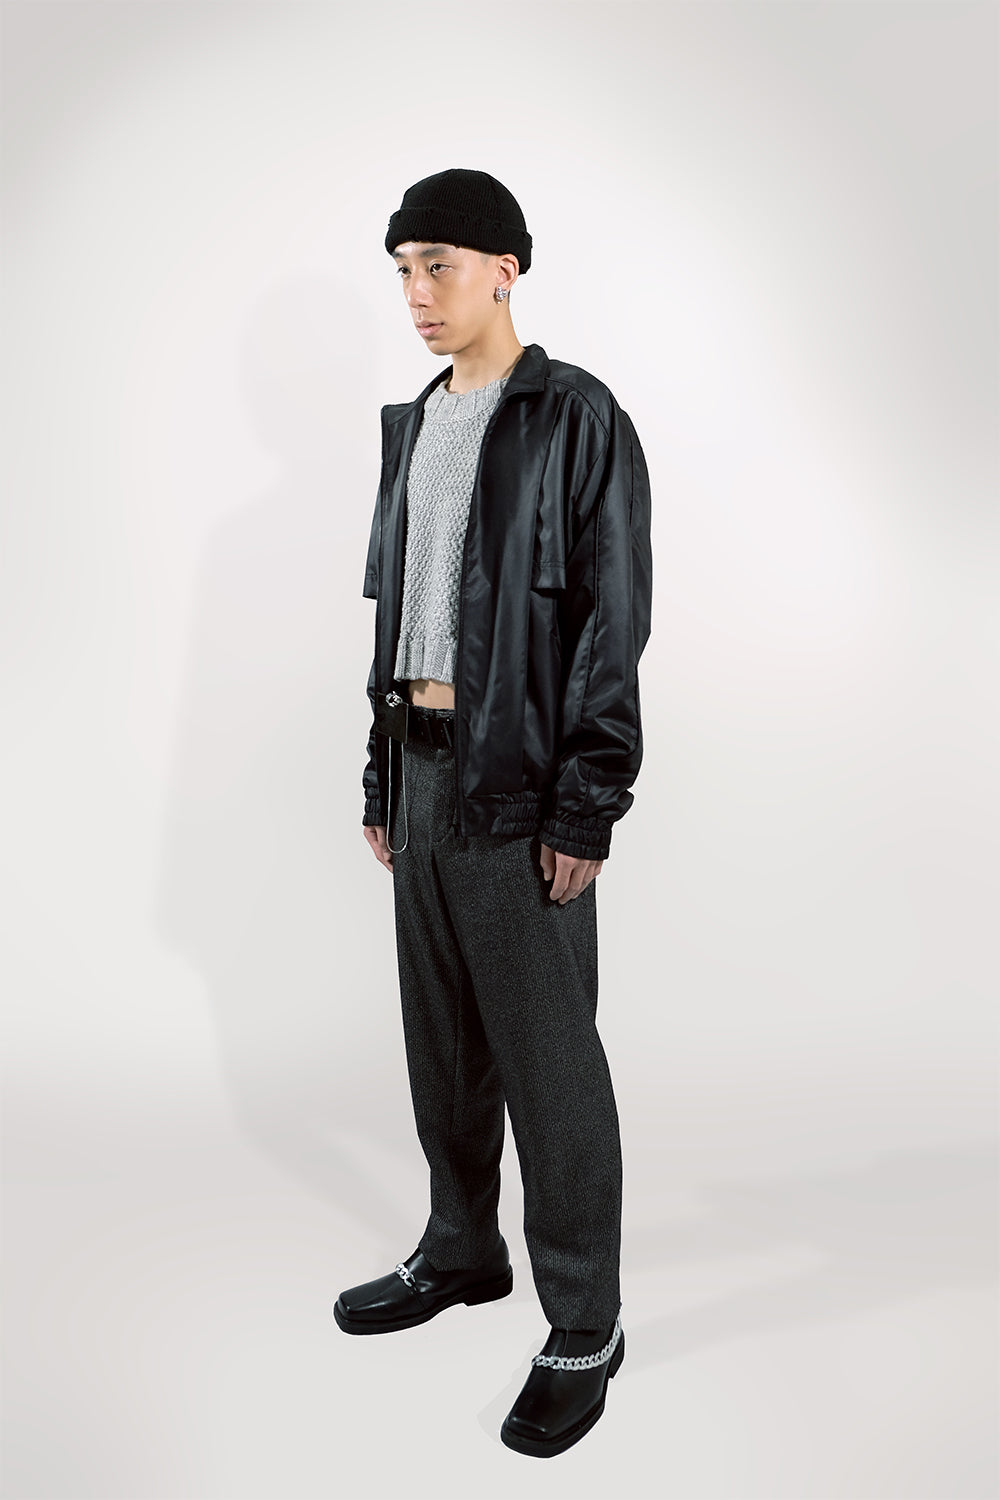 SEANNUNG - MEN - Cross windbreaker jacket 十字襠風衣夾克